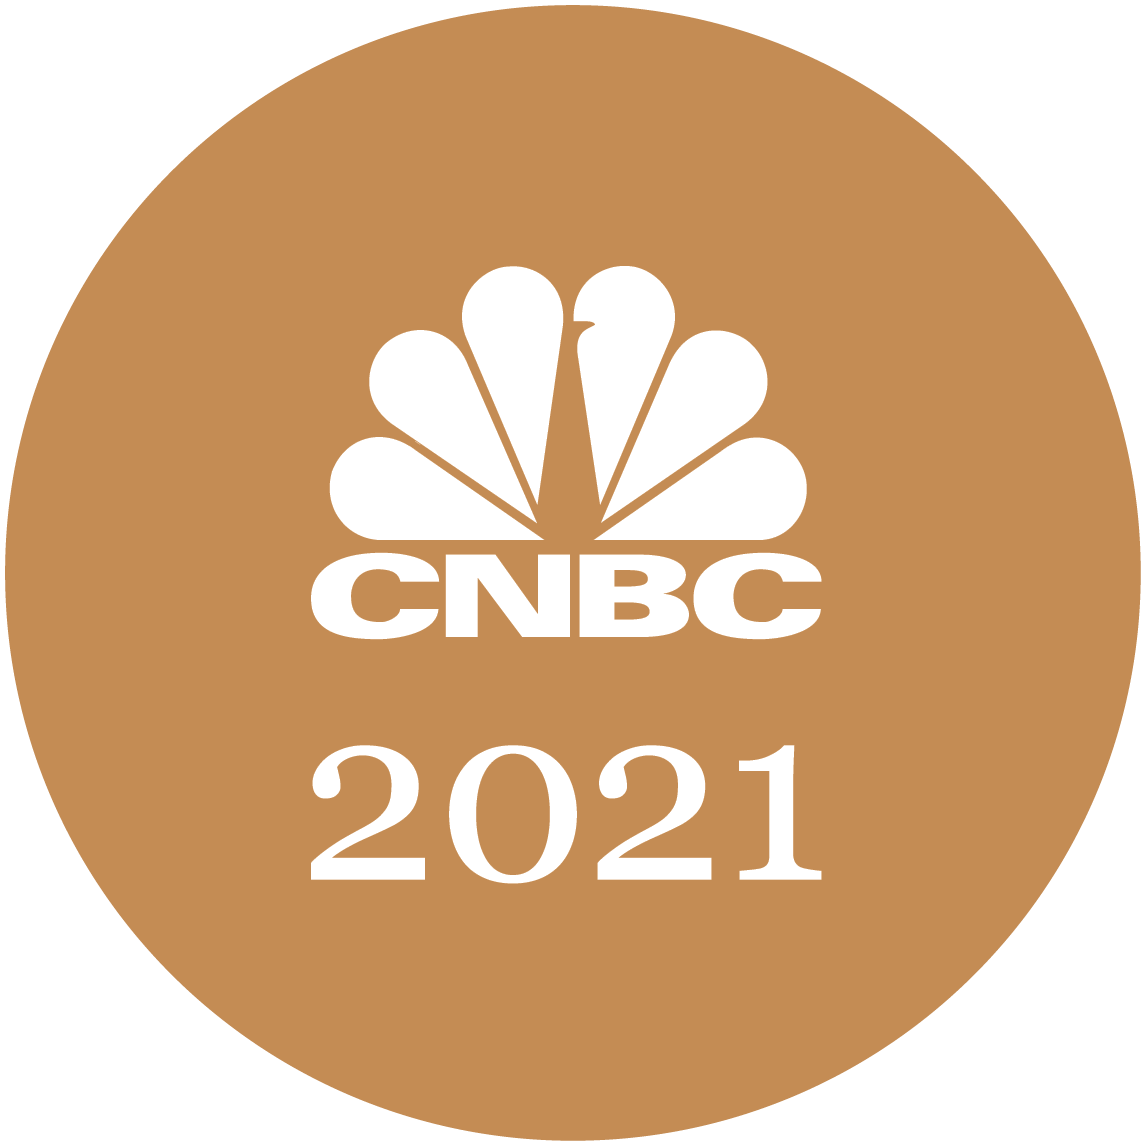 Sheaff Brock investment advisor, CNBC FA100, top rated financial advisor 2021